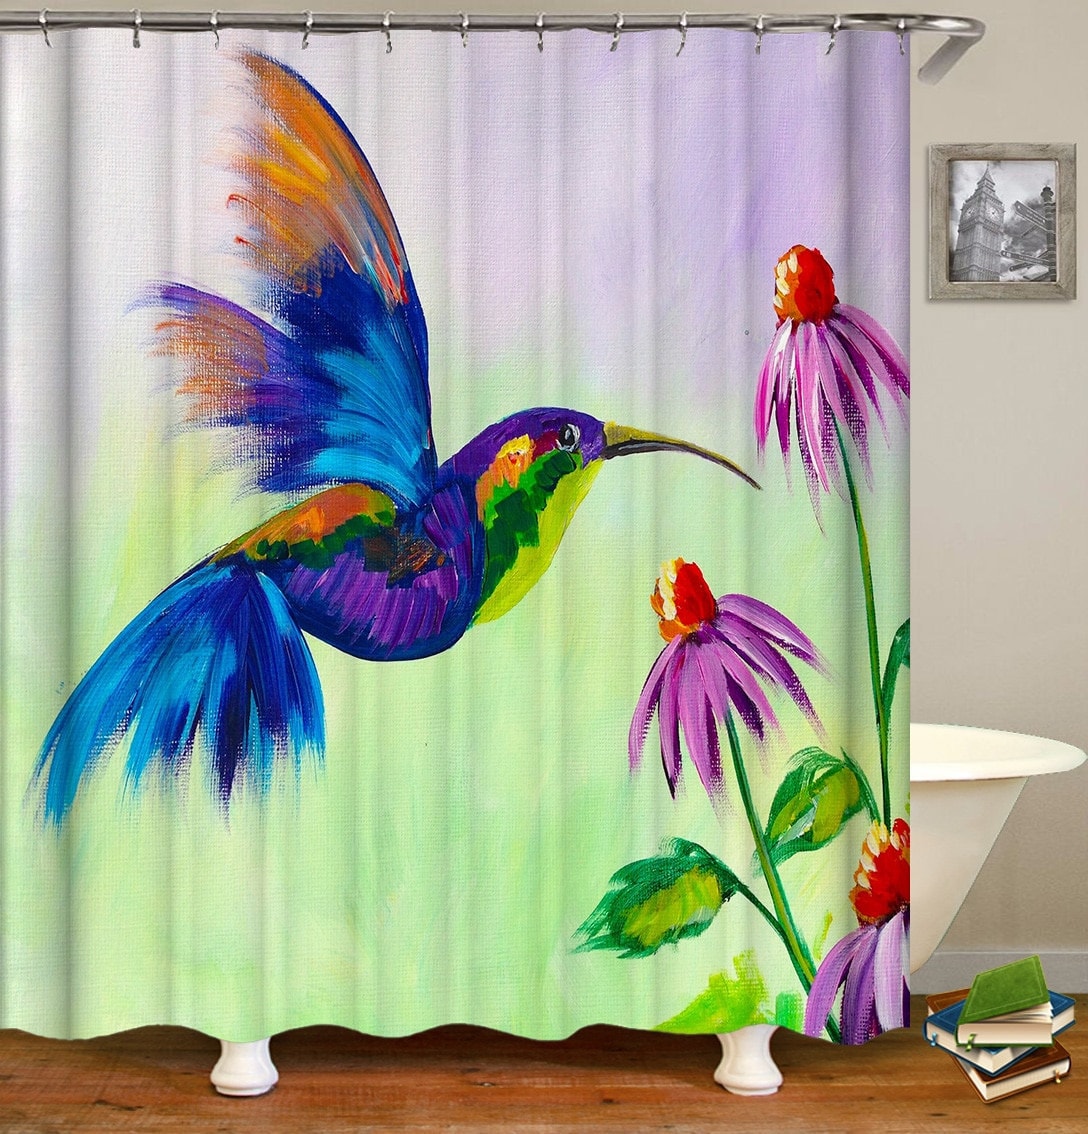 Hummingbird Red Flowers Shower Curtain Liner Waterproof Fabric Bathroom Mat Rug 